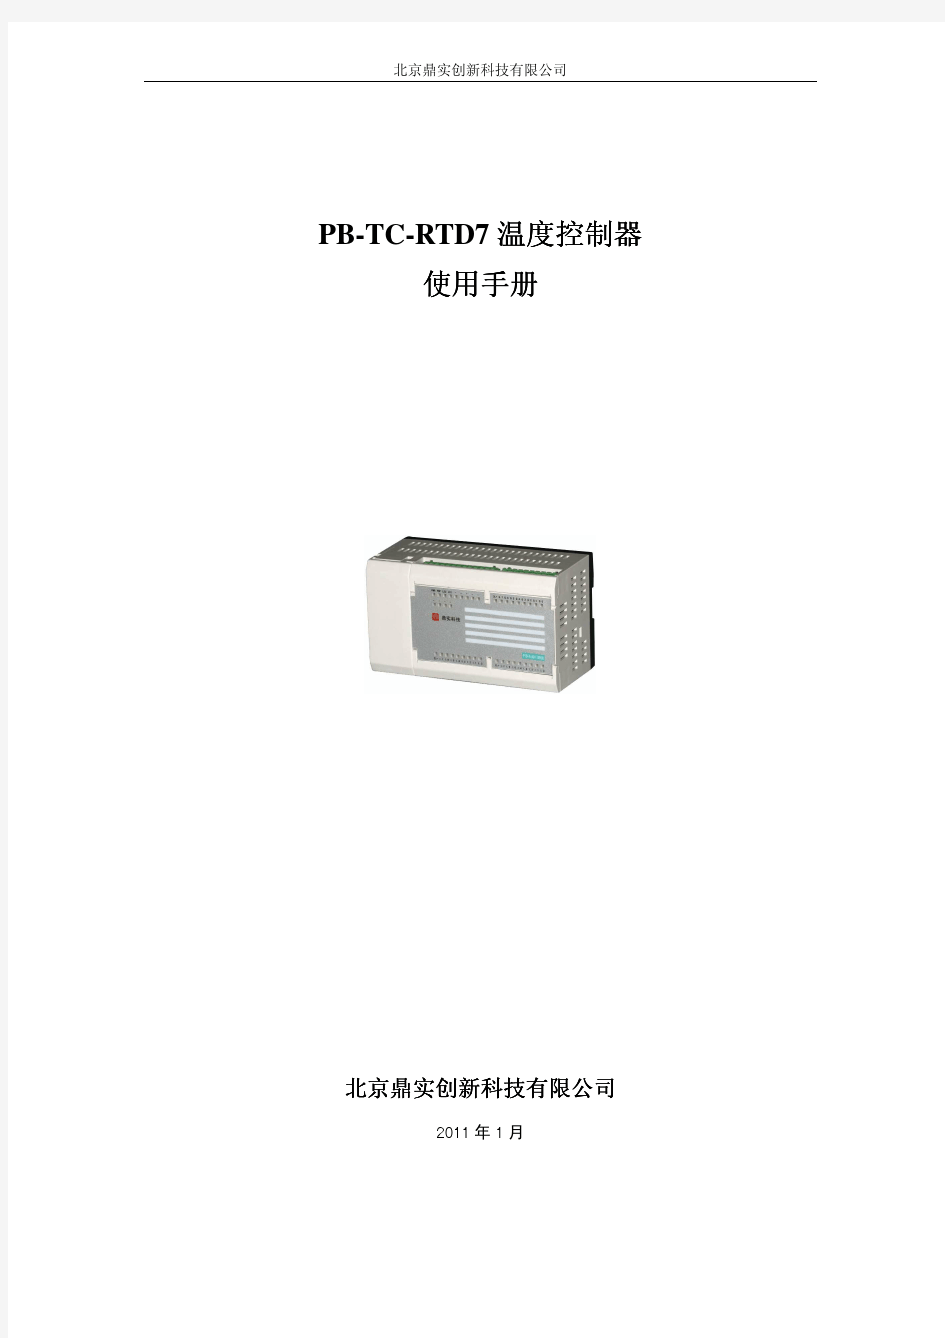 PB-TC-RTD产品手册